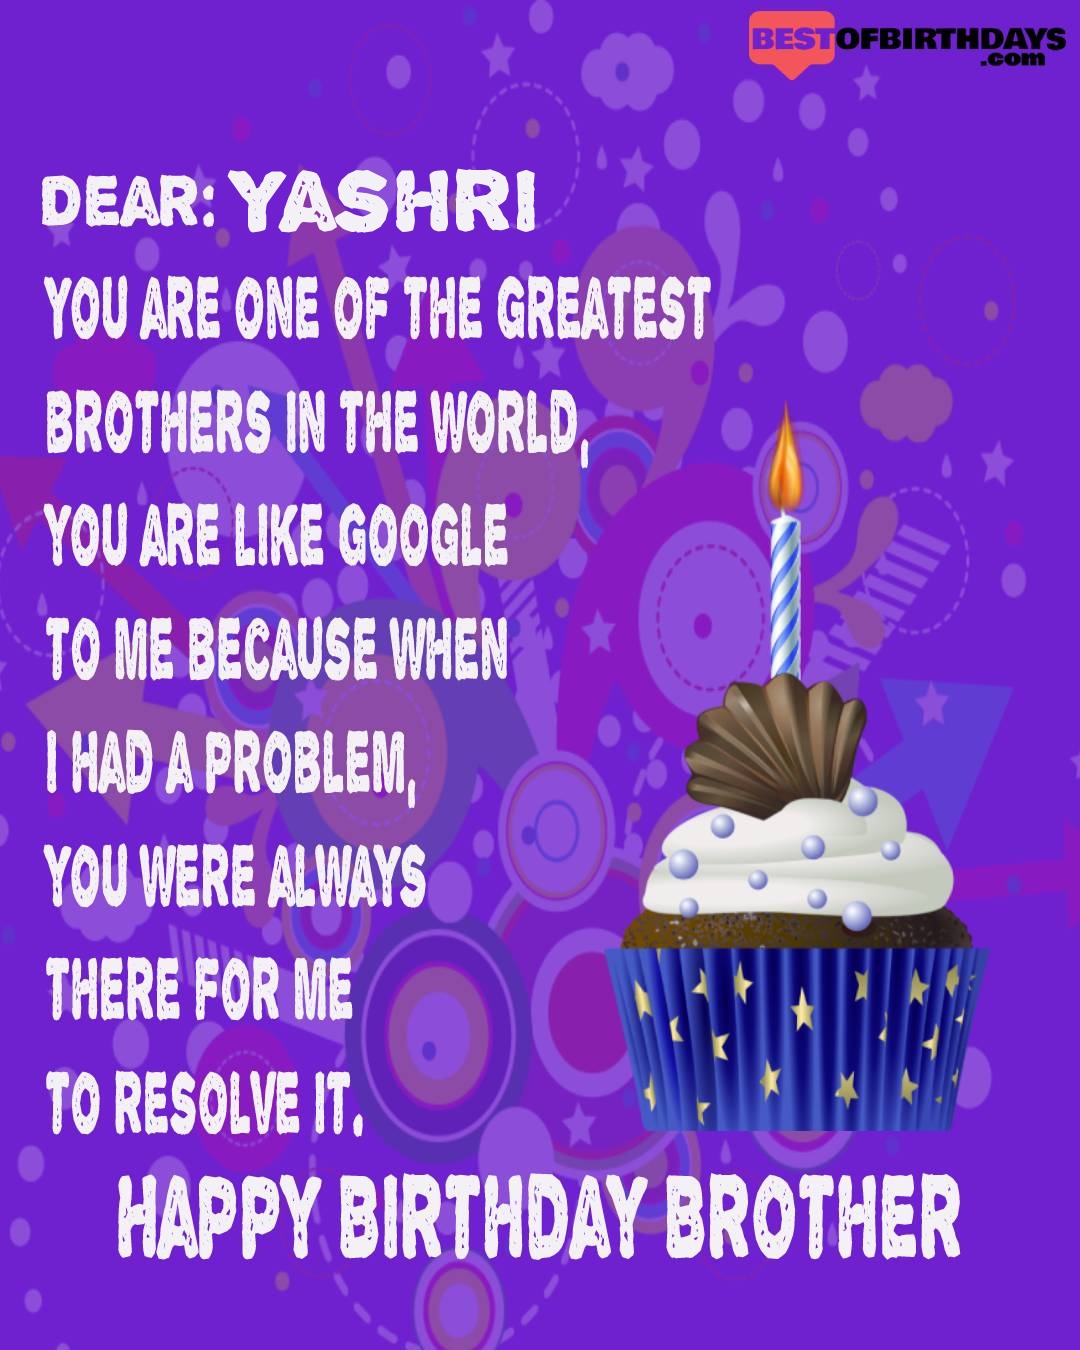 Happy birthday yashri bhai brother bro